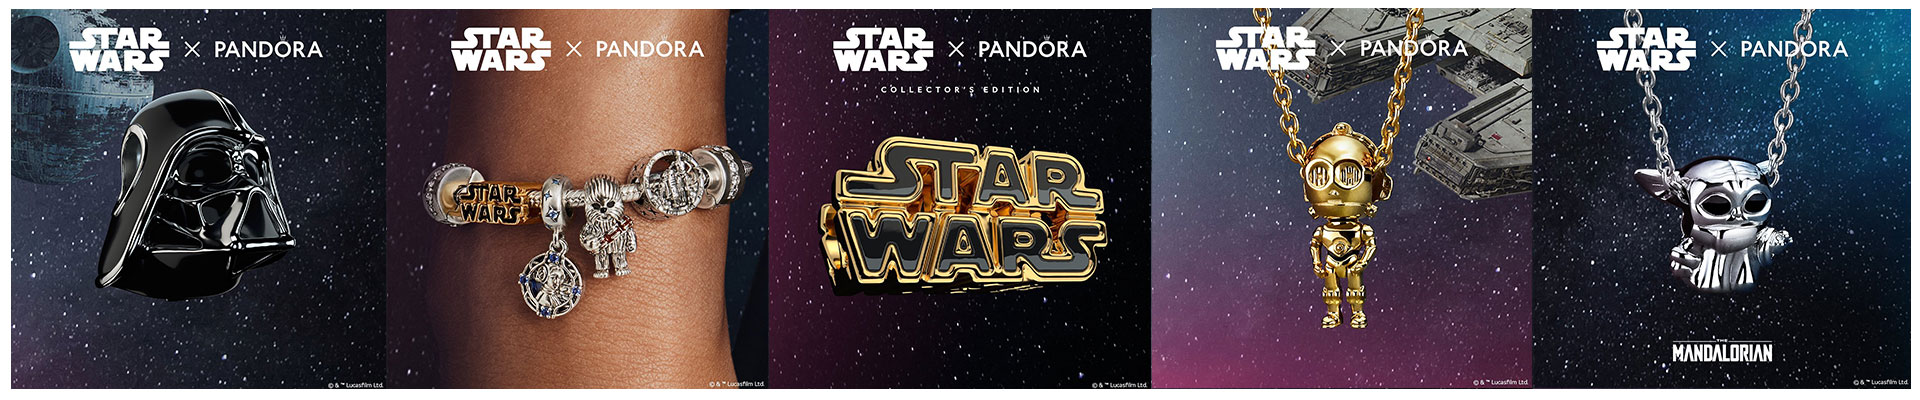 Star Wars x Pandora